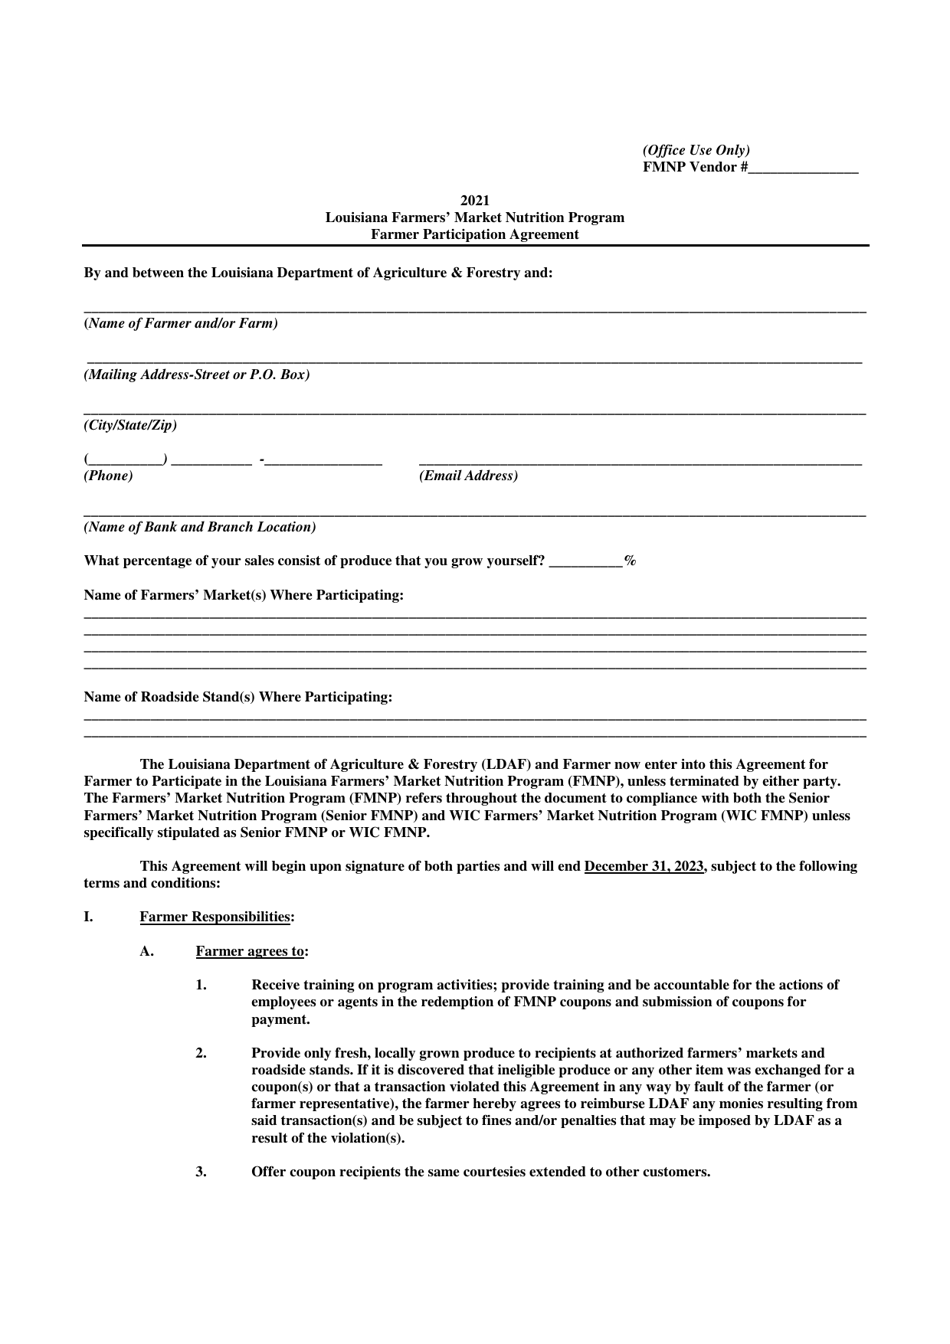 Farmer Participation Agreement - Louisiana Farmers Market Nutrition Program - Louisiana, Page 1